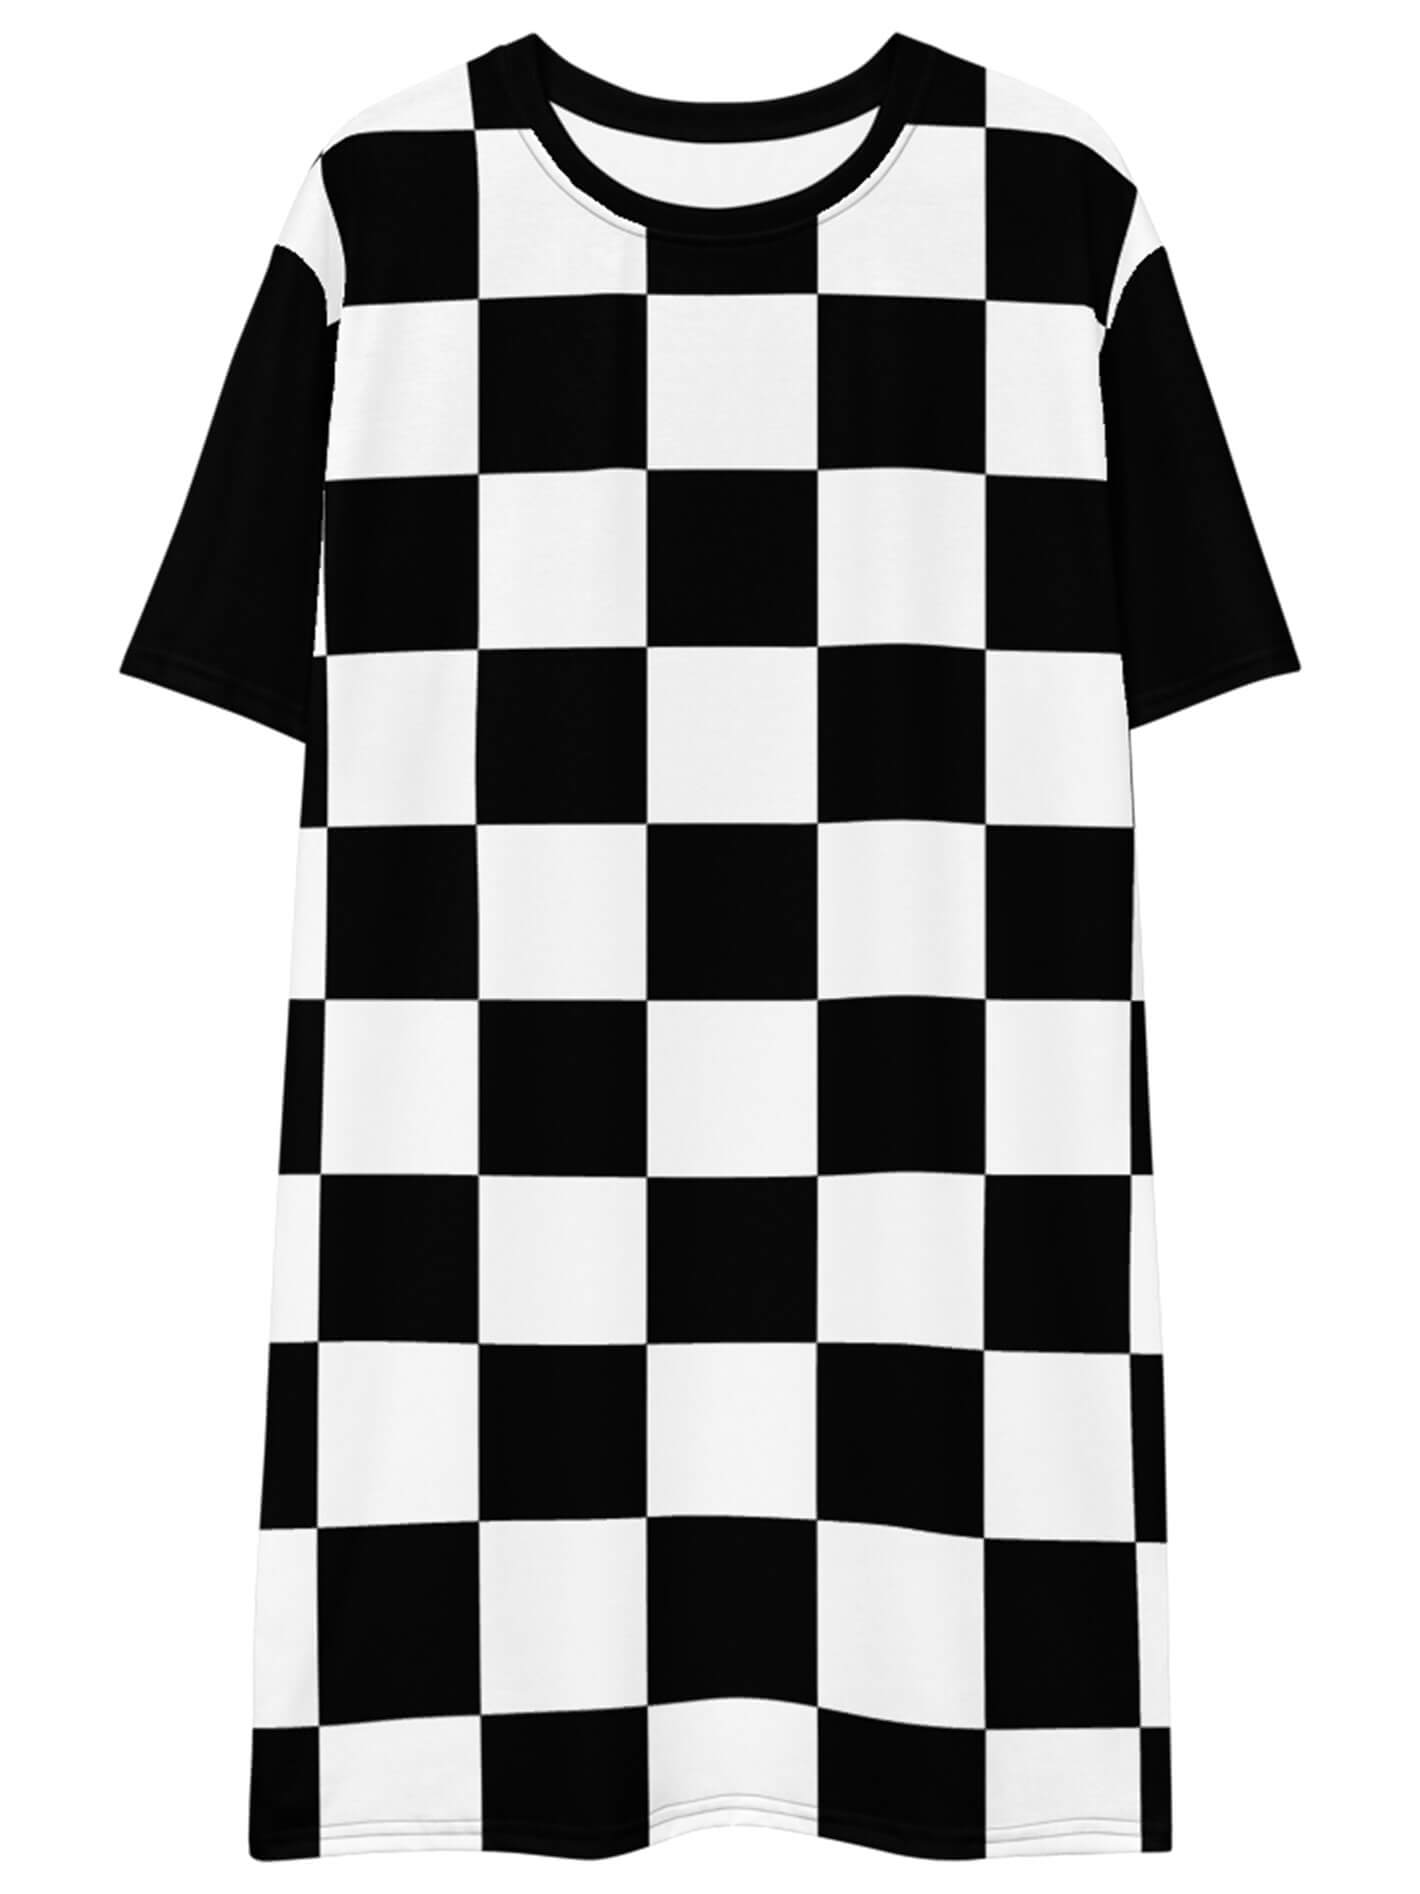 Checkered plus size dress.